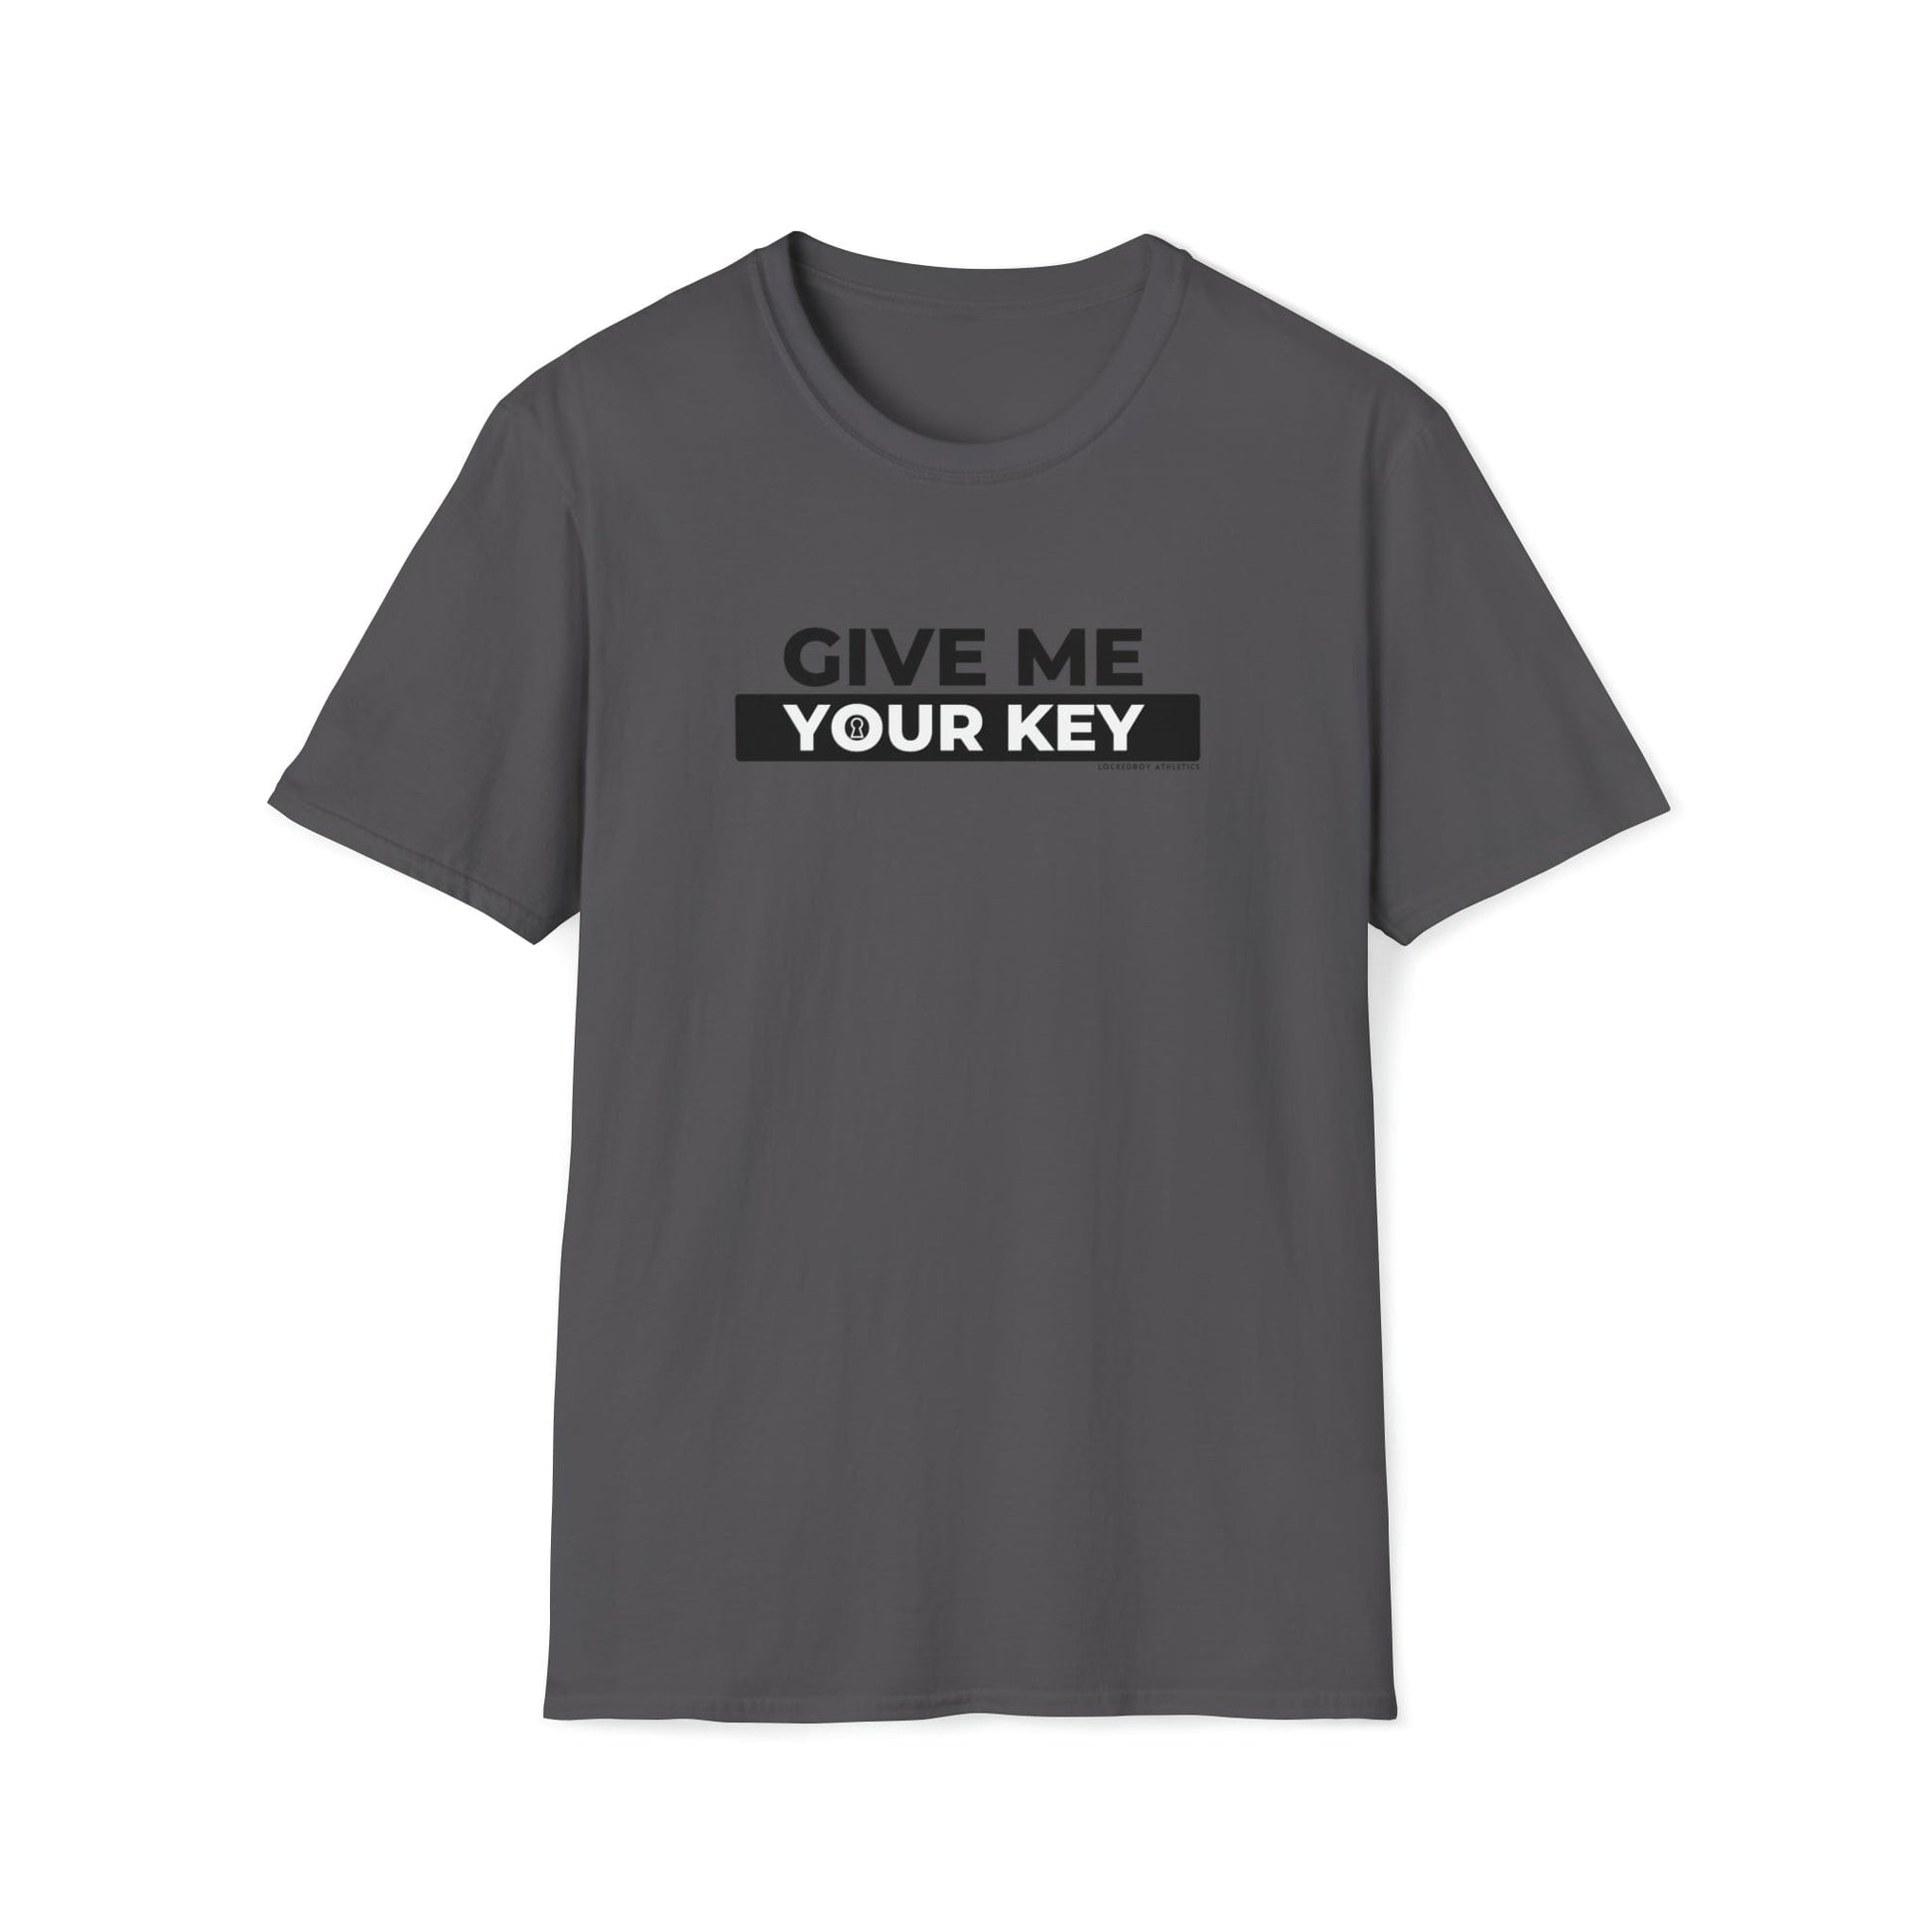 T-Shirt Charcoal / S Give Me Your Key - Chastity Shirts by LockedBoy Athletics LEATHERDADDY BATOR